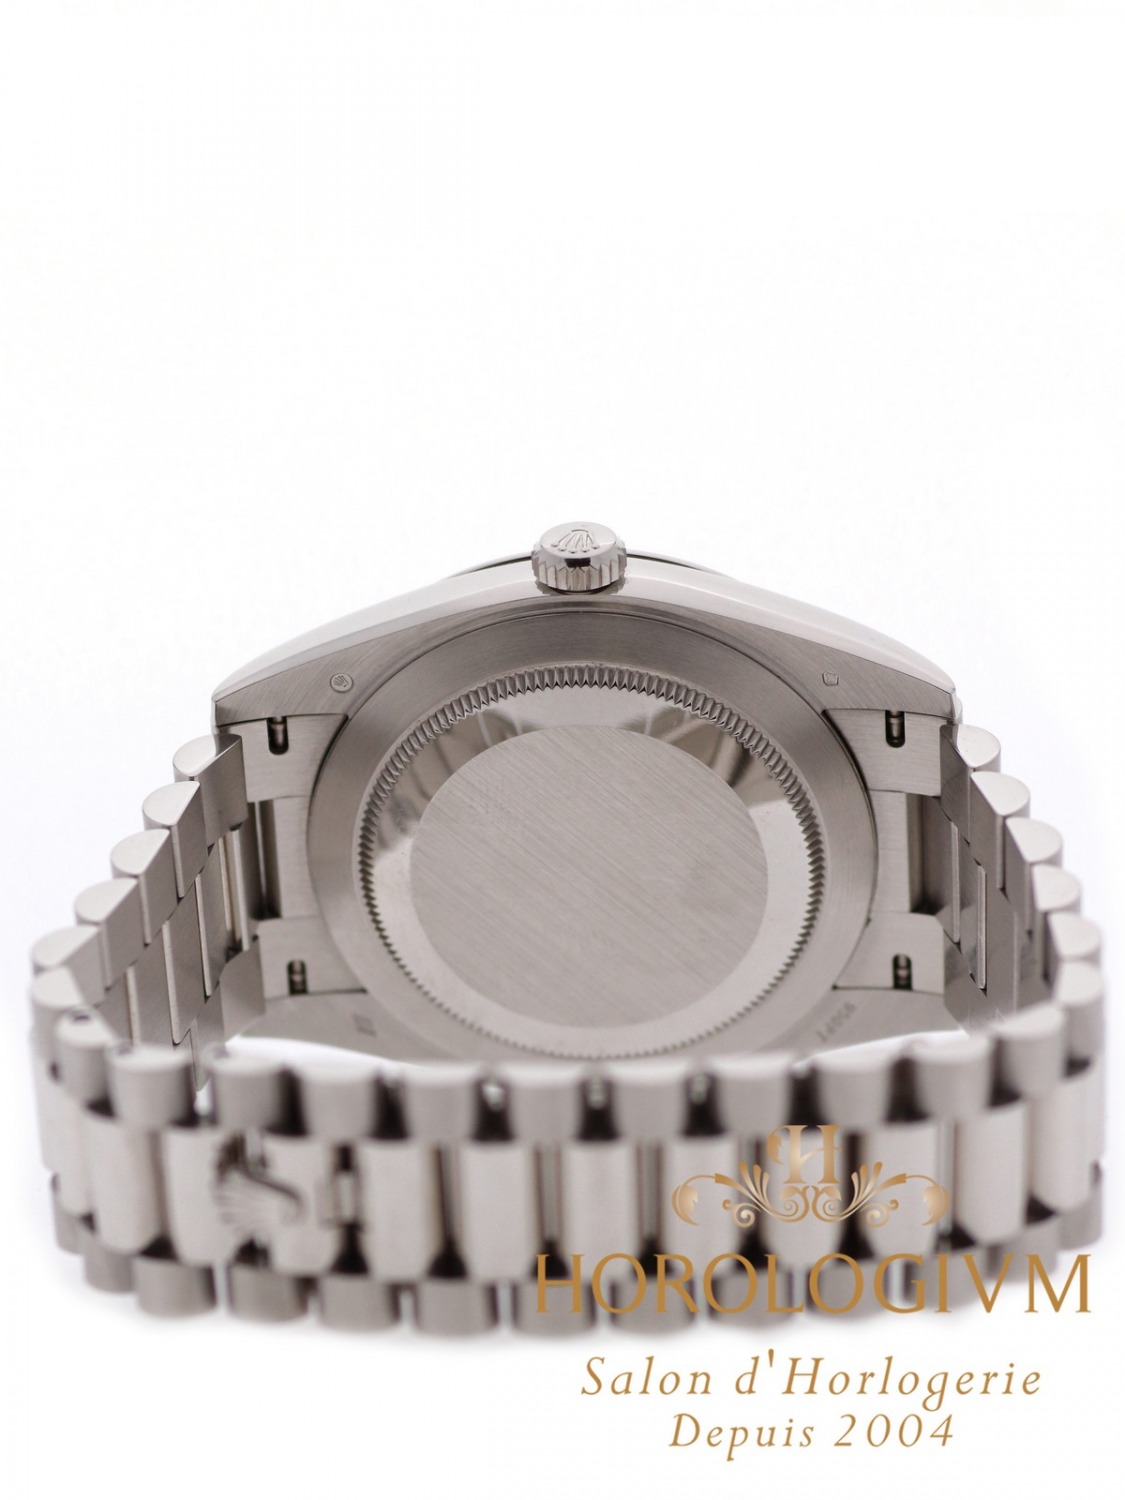 Rolex Day-Date 40 Platinum Ice Blue Roman Dial watch, silver